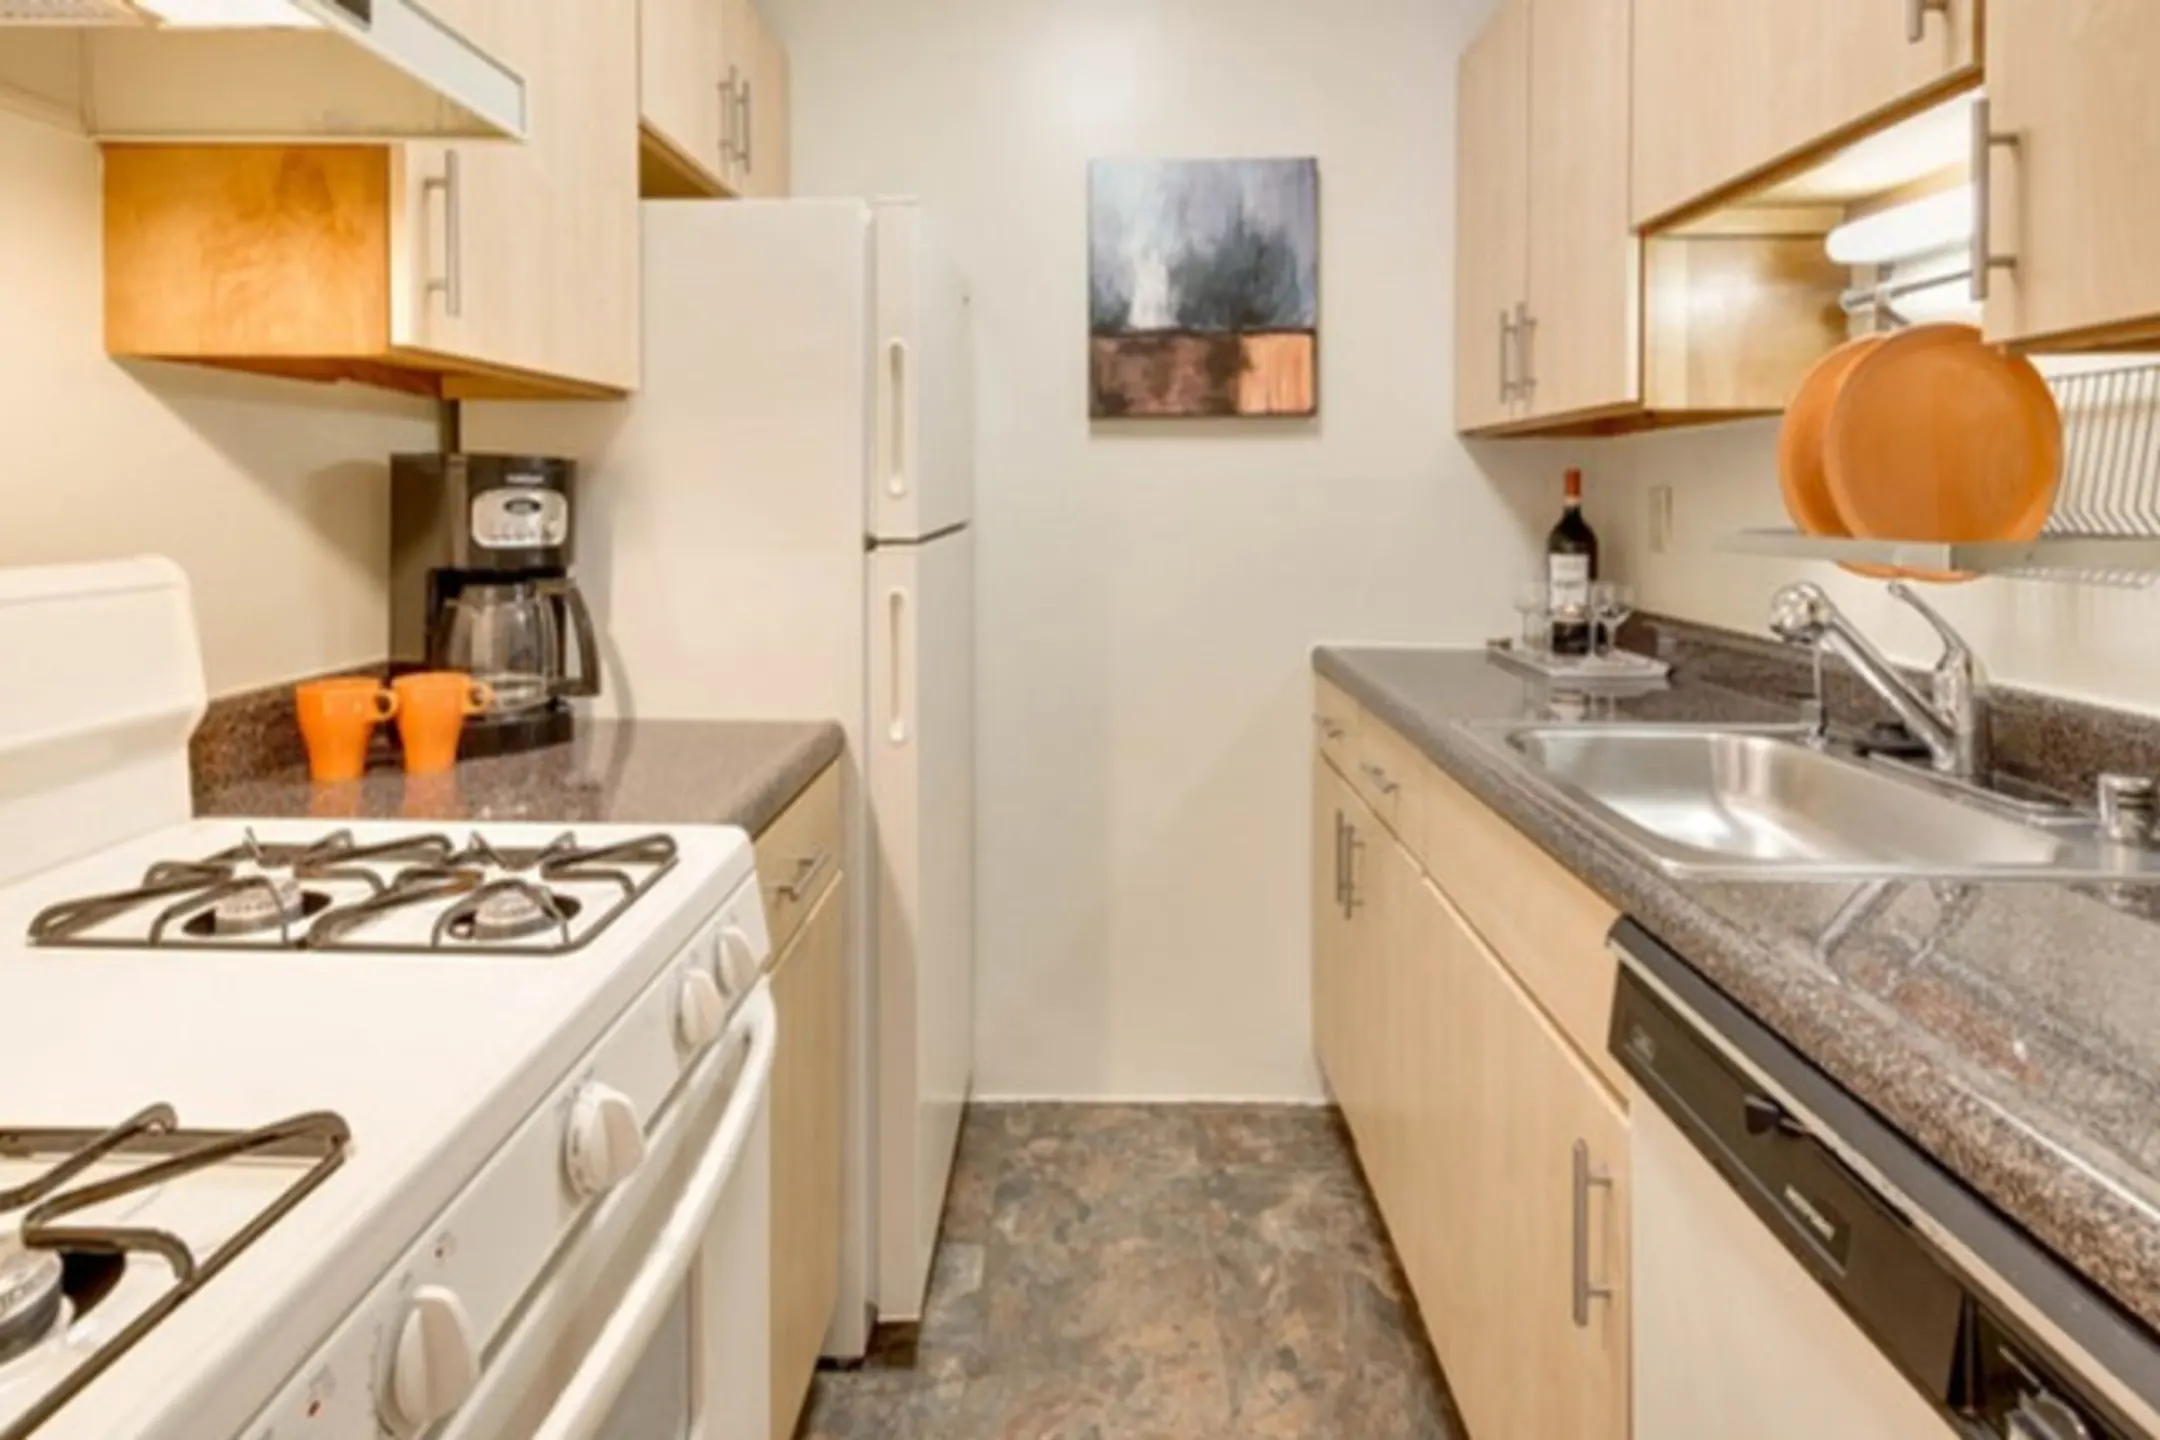 Kitchen - Azalea Apartments - Takoma Park, MD